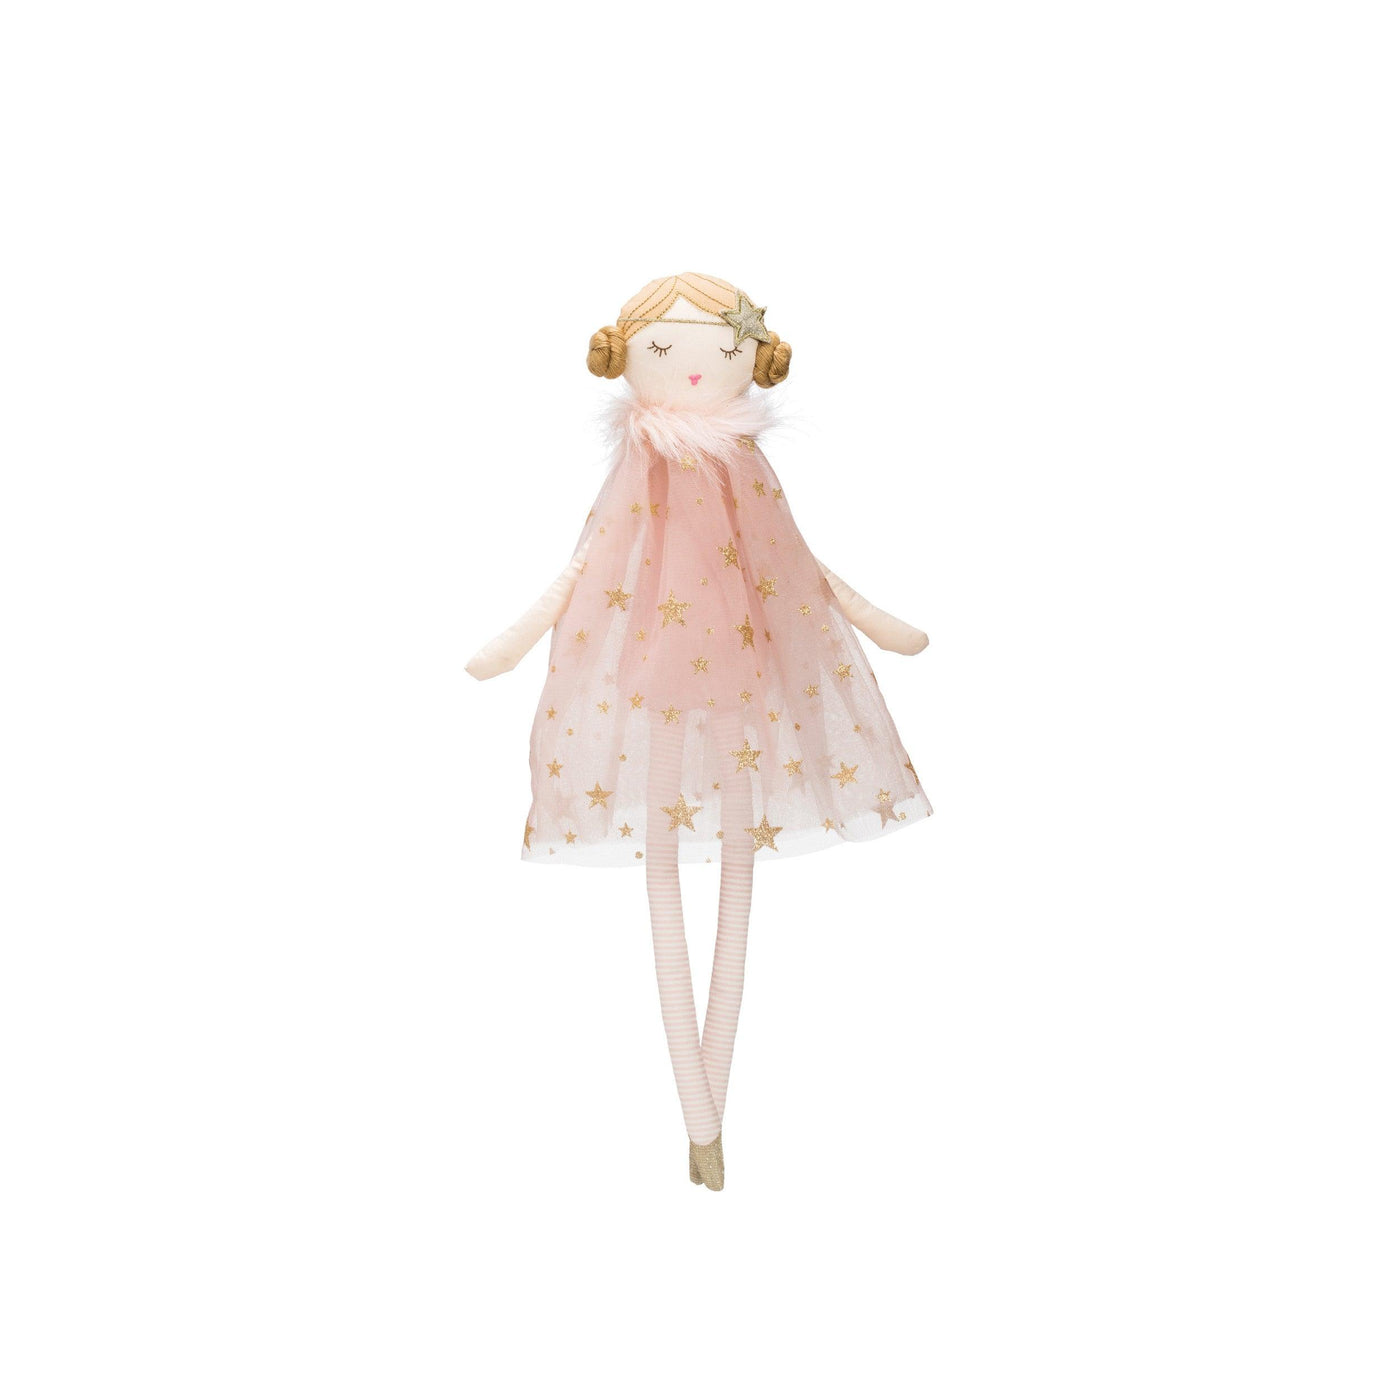 Cotton Doll in Star Dress - Birch and Bind